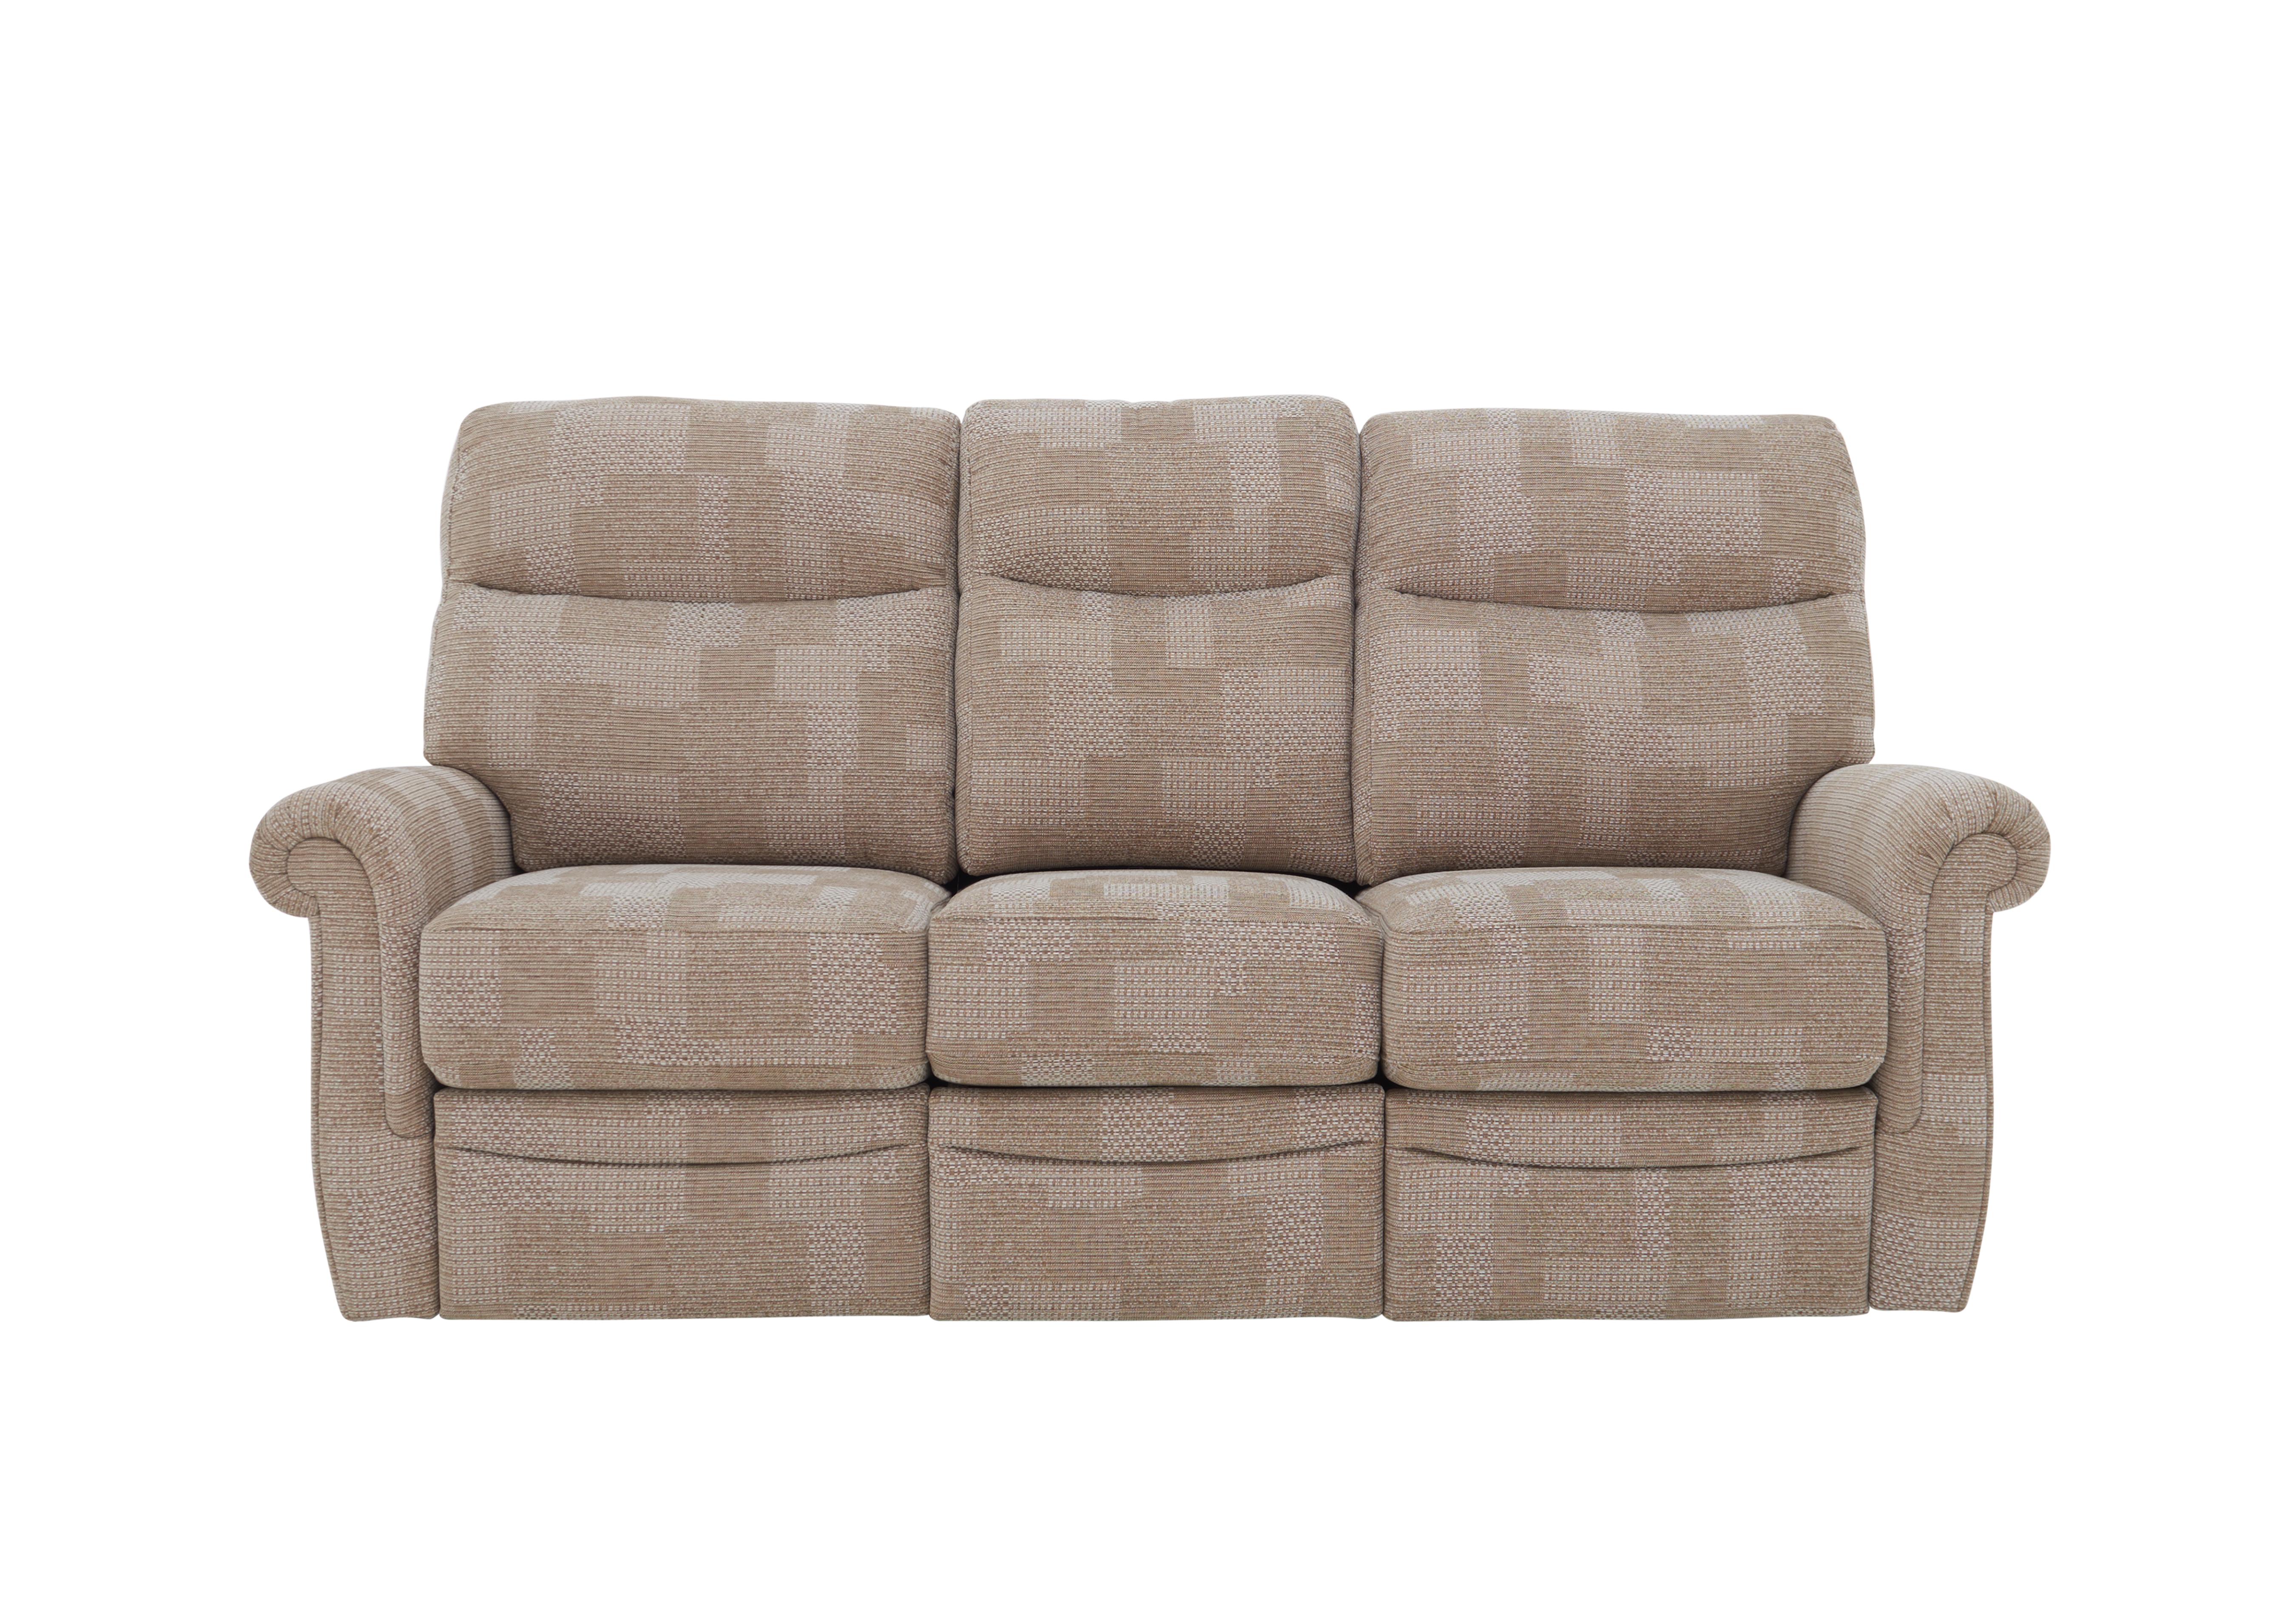 Avon 3 Seater Fabric Sofa in A800 Faro Sand on Furniture Village